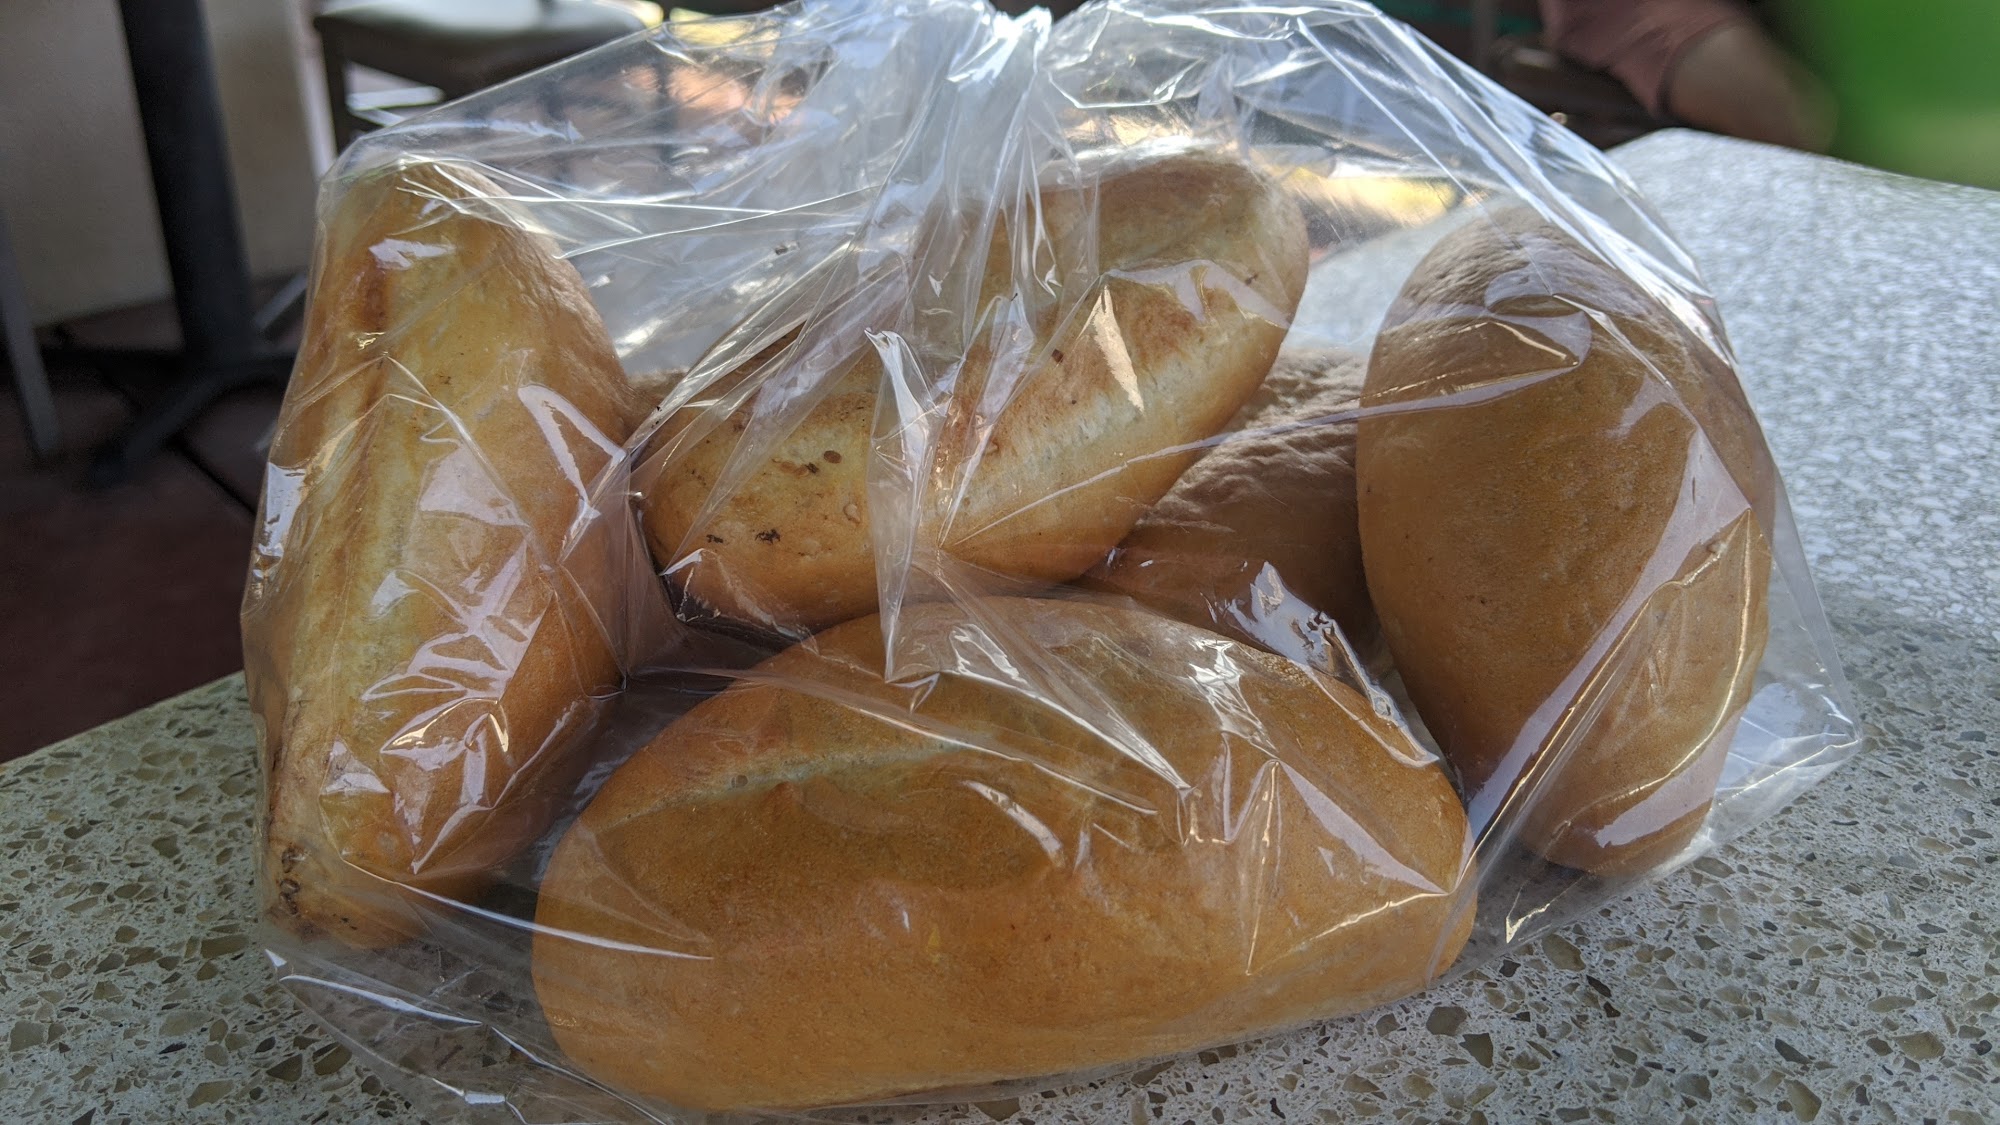 Frank's Bakery - Gibaldi's Italian Bread